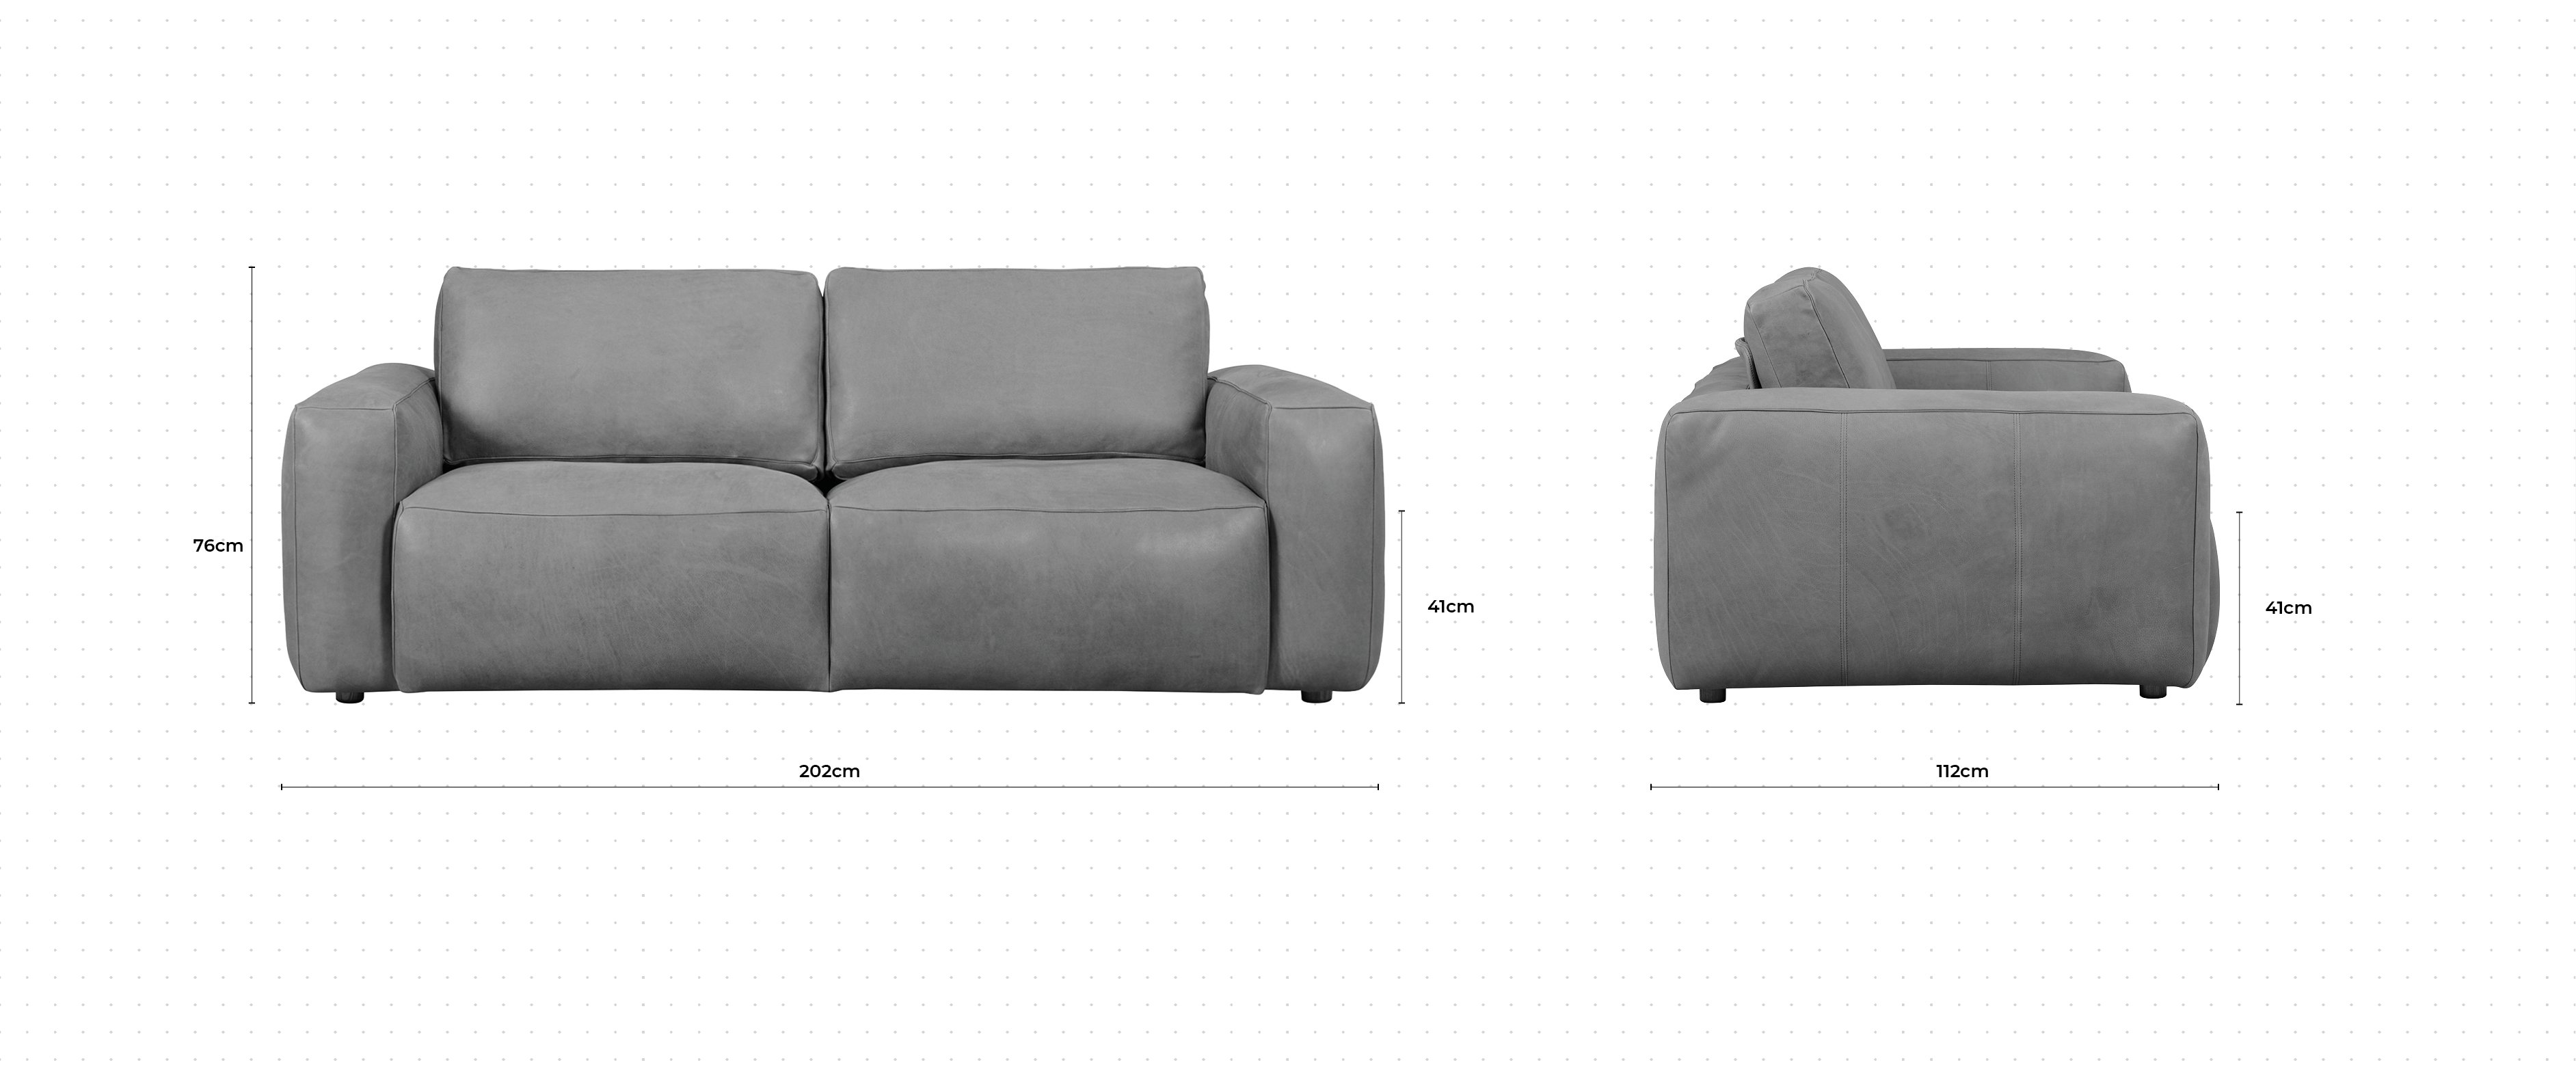 Truffle 2 Seater Sofa dimensions